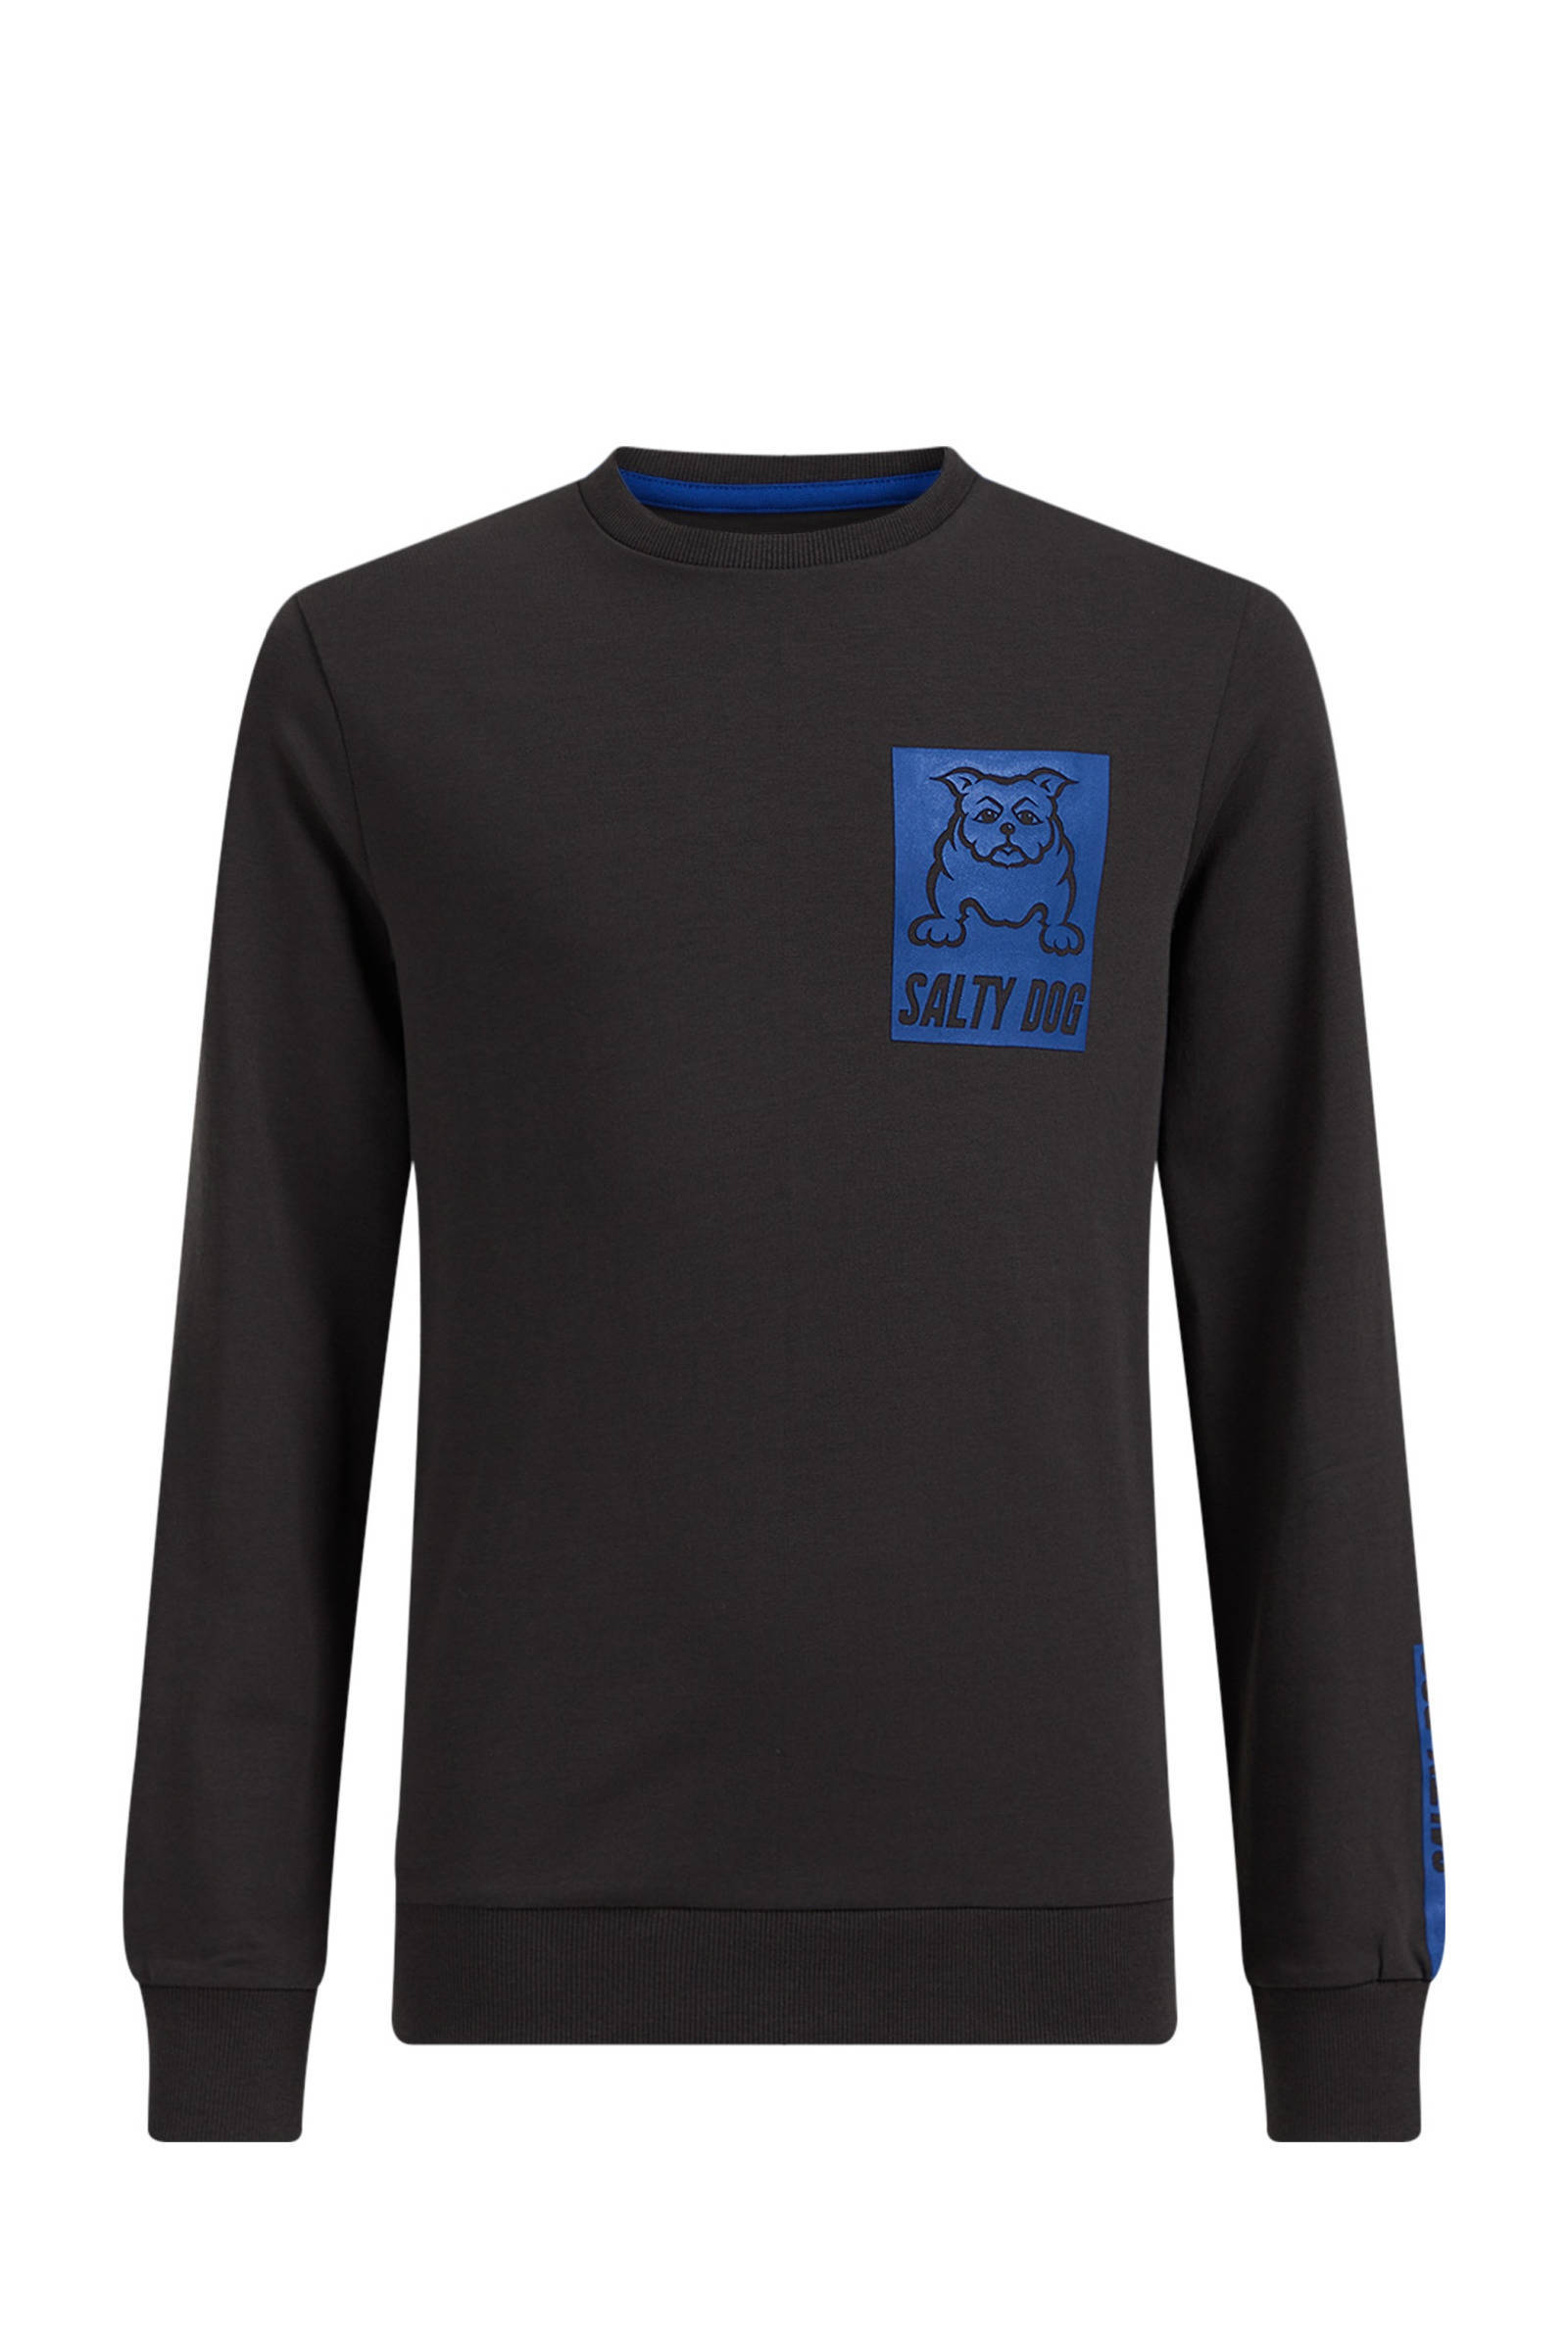 Salty Dog longsleeve zwart/grijs wehkamp Jongens Kleding Tops & Shirts Shirts Lange Mouwen Shirts 